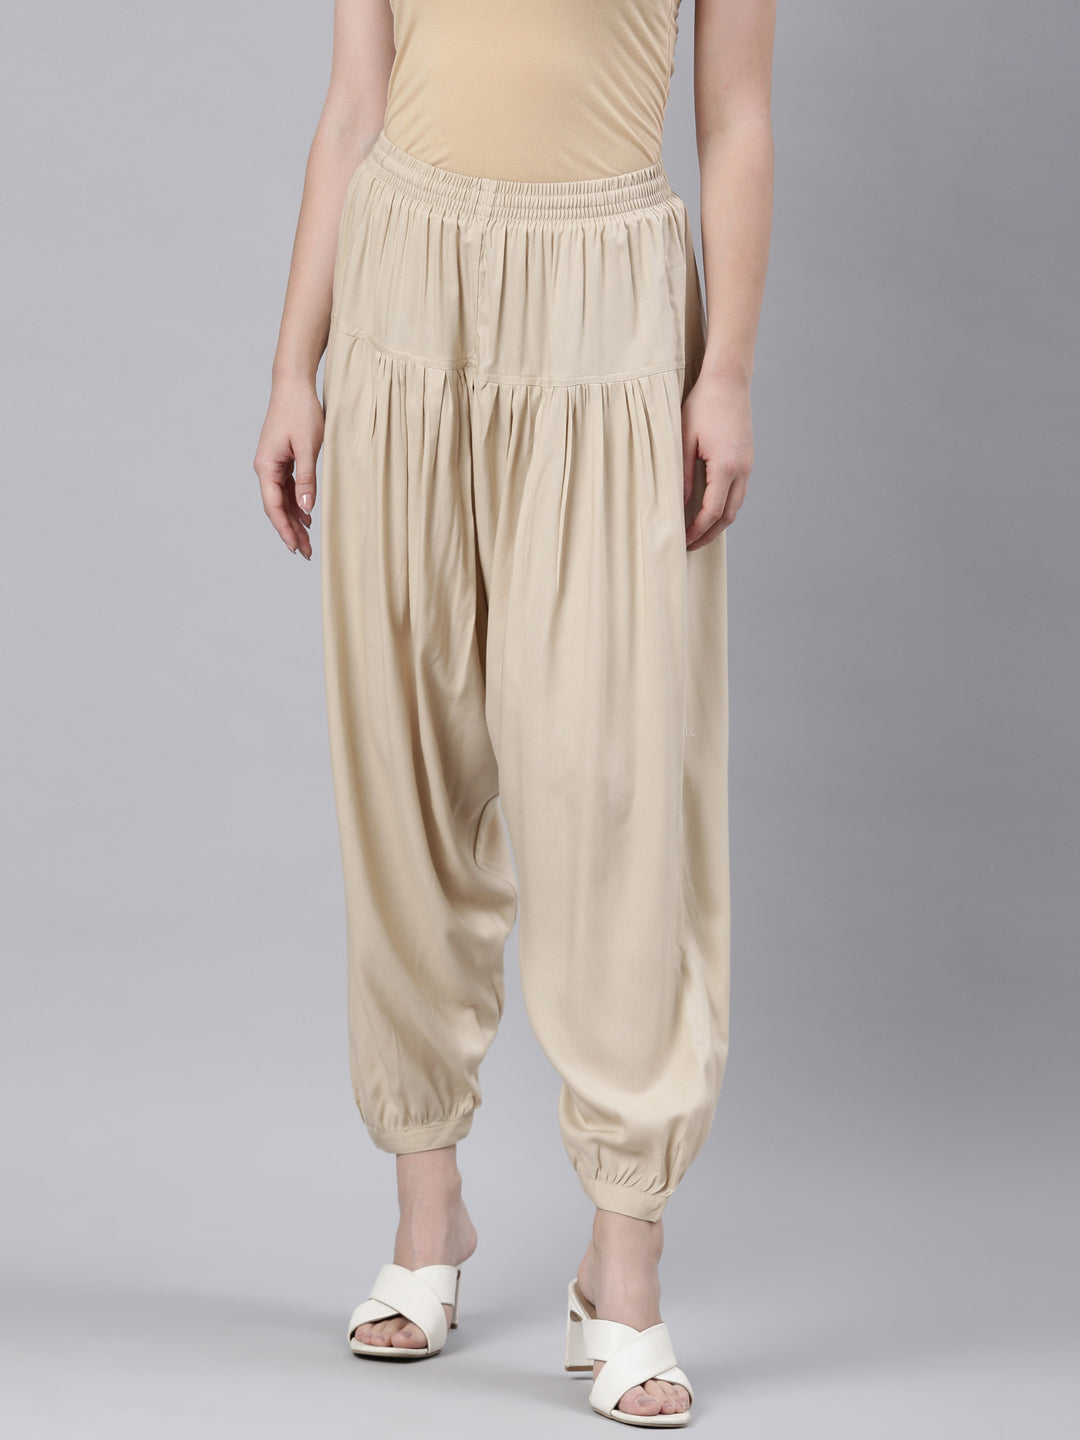 Womens Elastic Waist Cotton Linen Harem Pants Ladies Casual Baggy Trousers  Solid | eBay